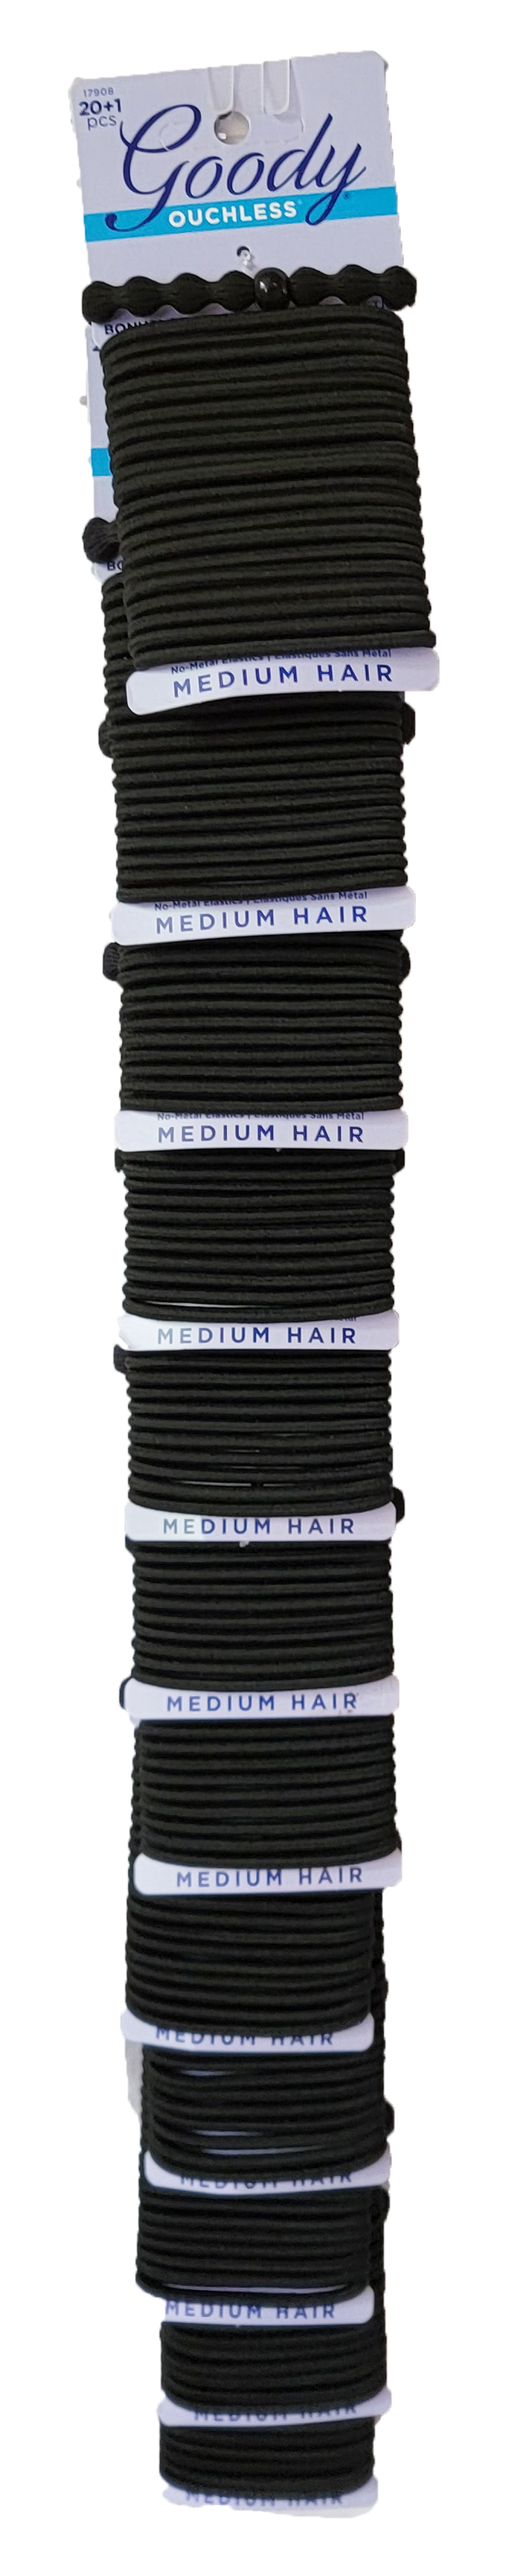 Goody Black Ouchless Hair Elastics 20 Count + 1 Bonus Forever Elastic, 12 Unit per Clip Strip - Click Image to Close